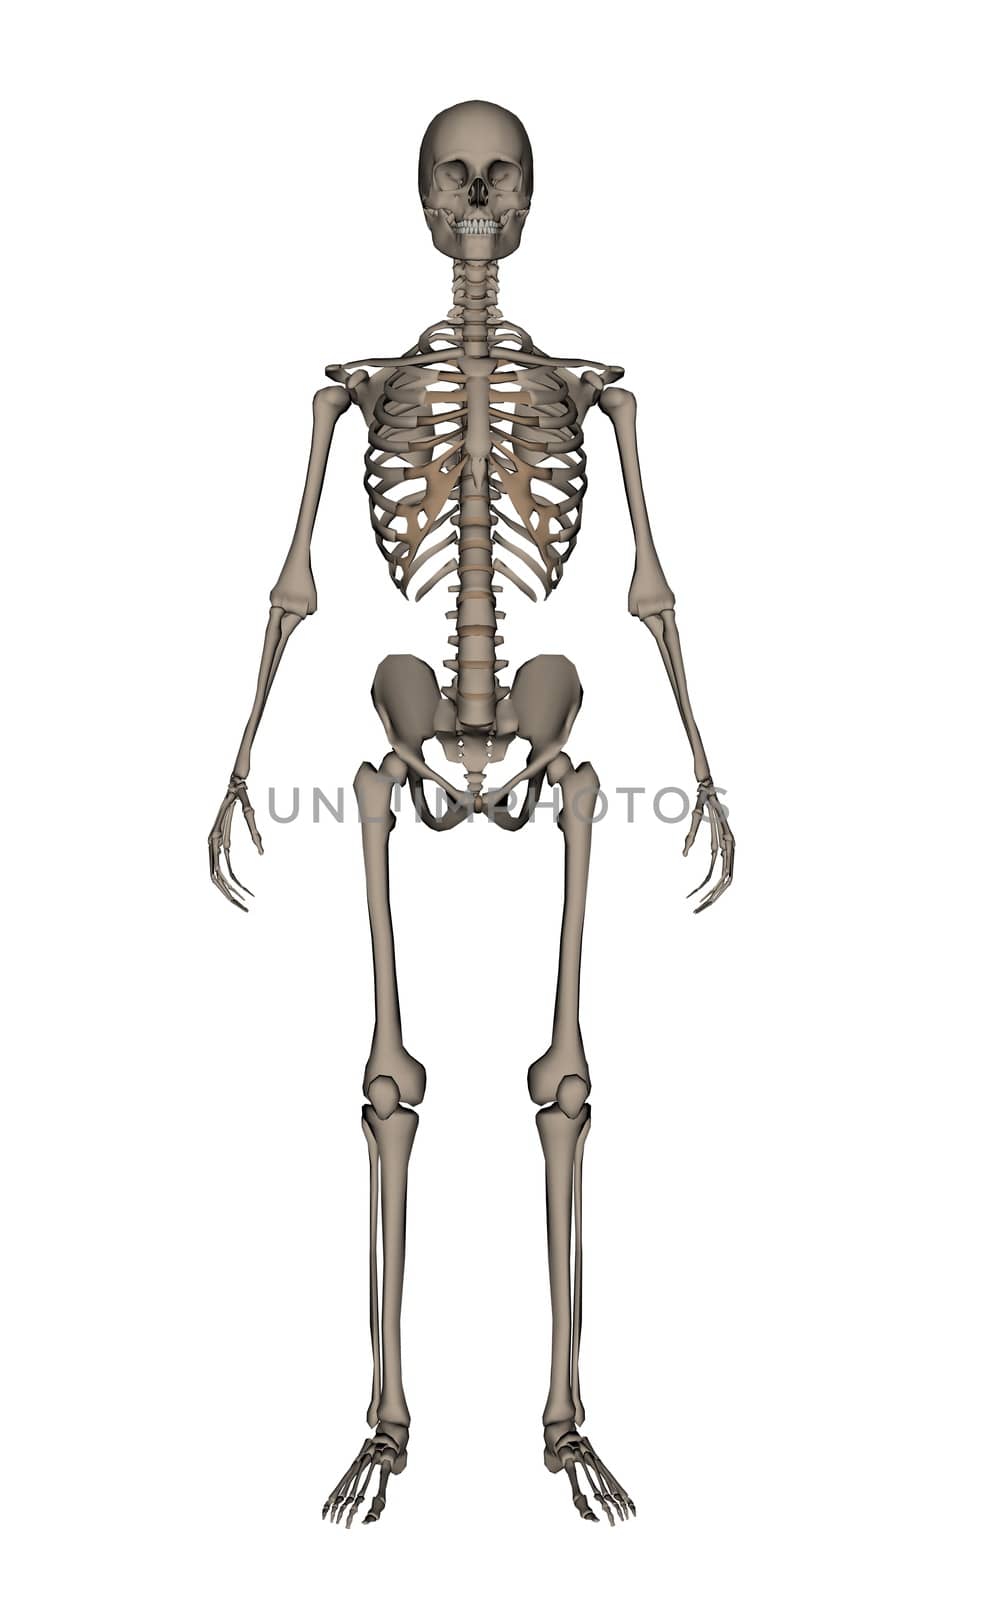 Human skeleton - 3D render by Elenaphotos21